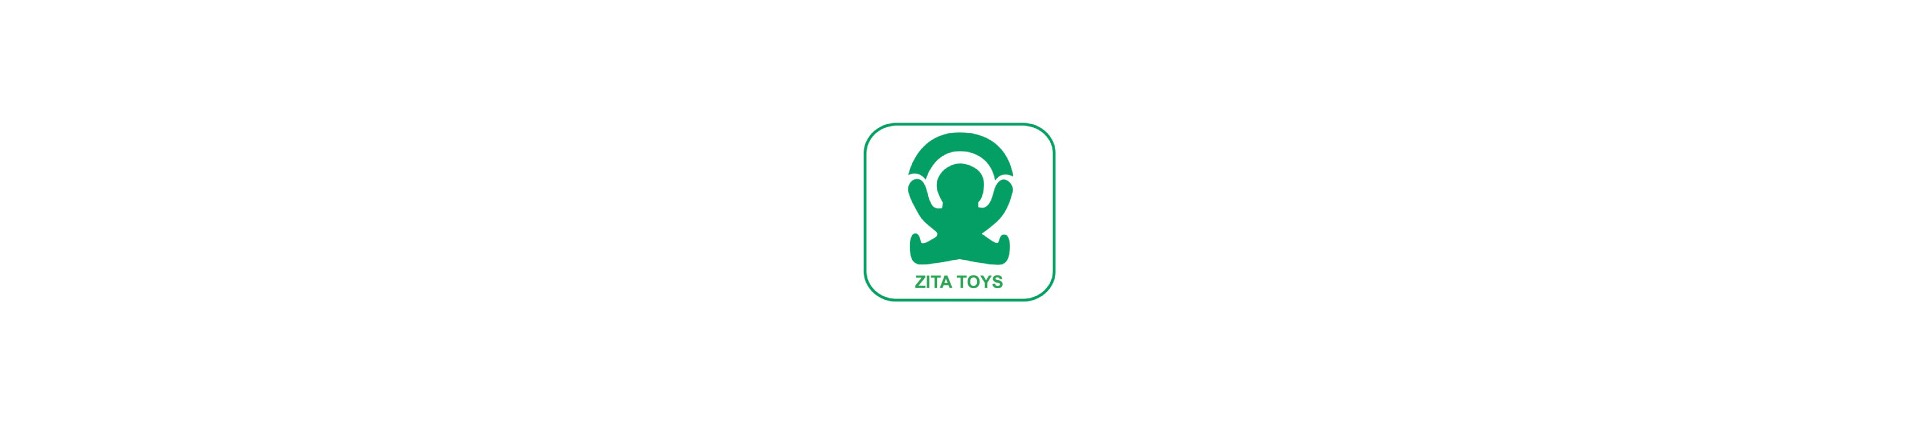 Zita toys